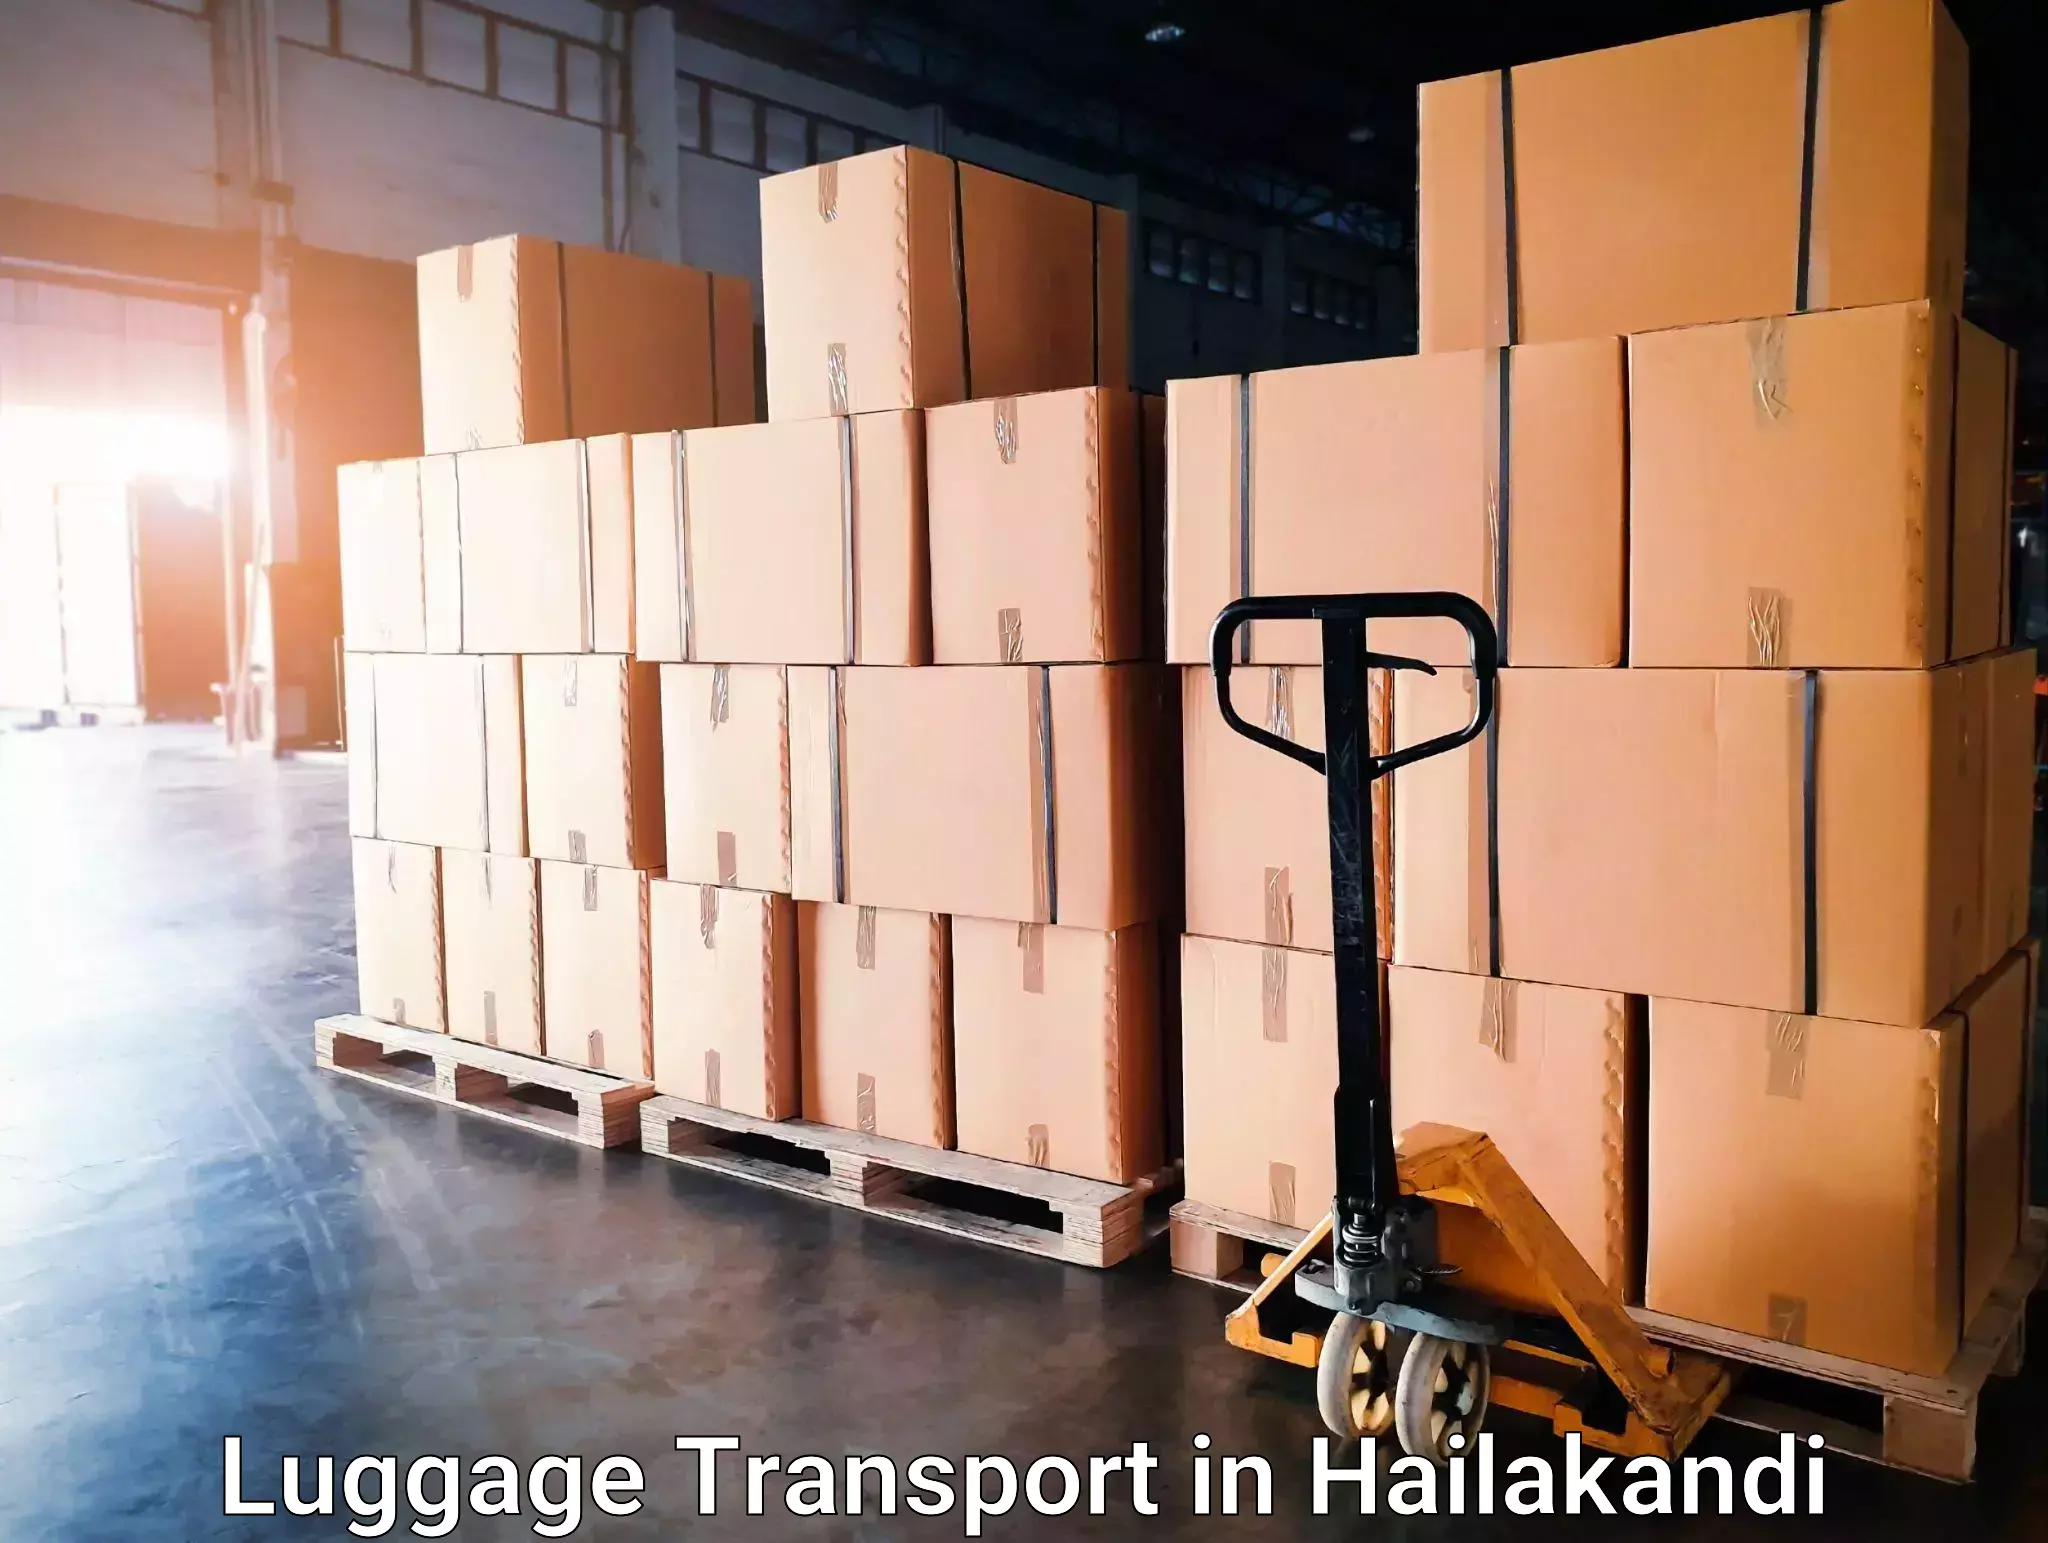 Luggage transfer service in Hailakandi